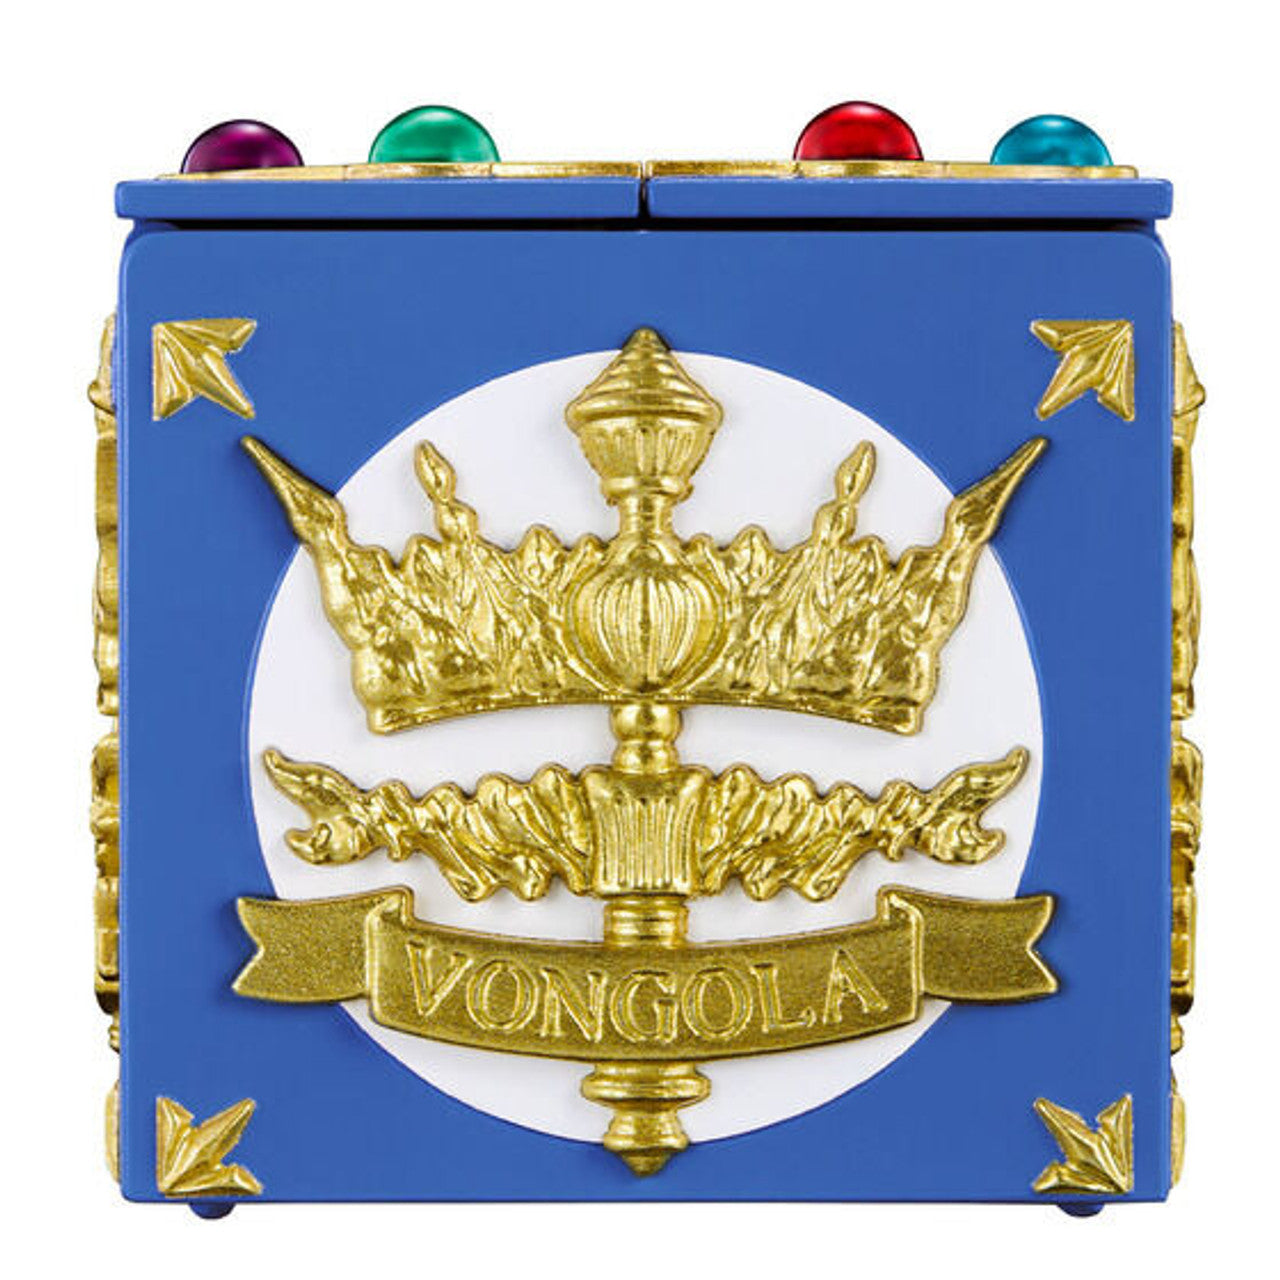 Bandai - Arsenal Toy - Katekyo Hitman Reborn! - Special Memorize Vongola Box & Vongola Ring Set (Mukuro Rokudo) - Marvelous Toys